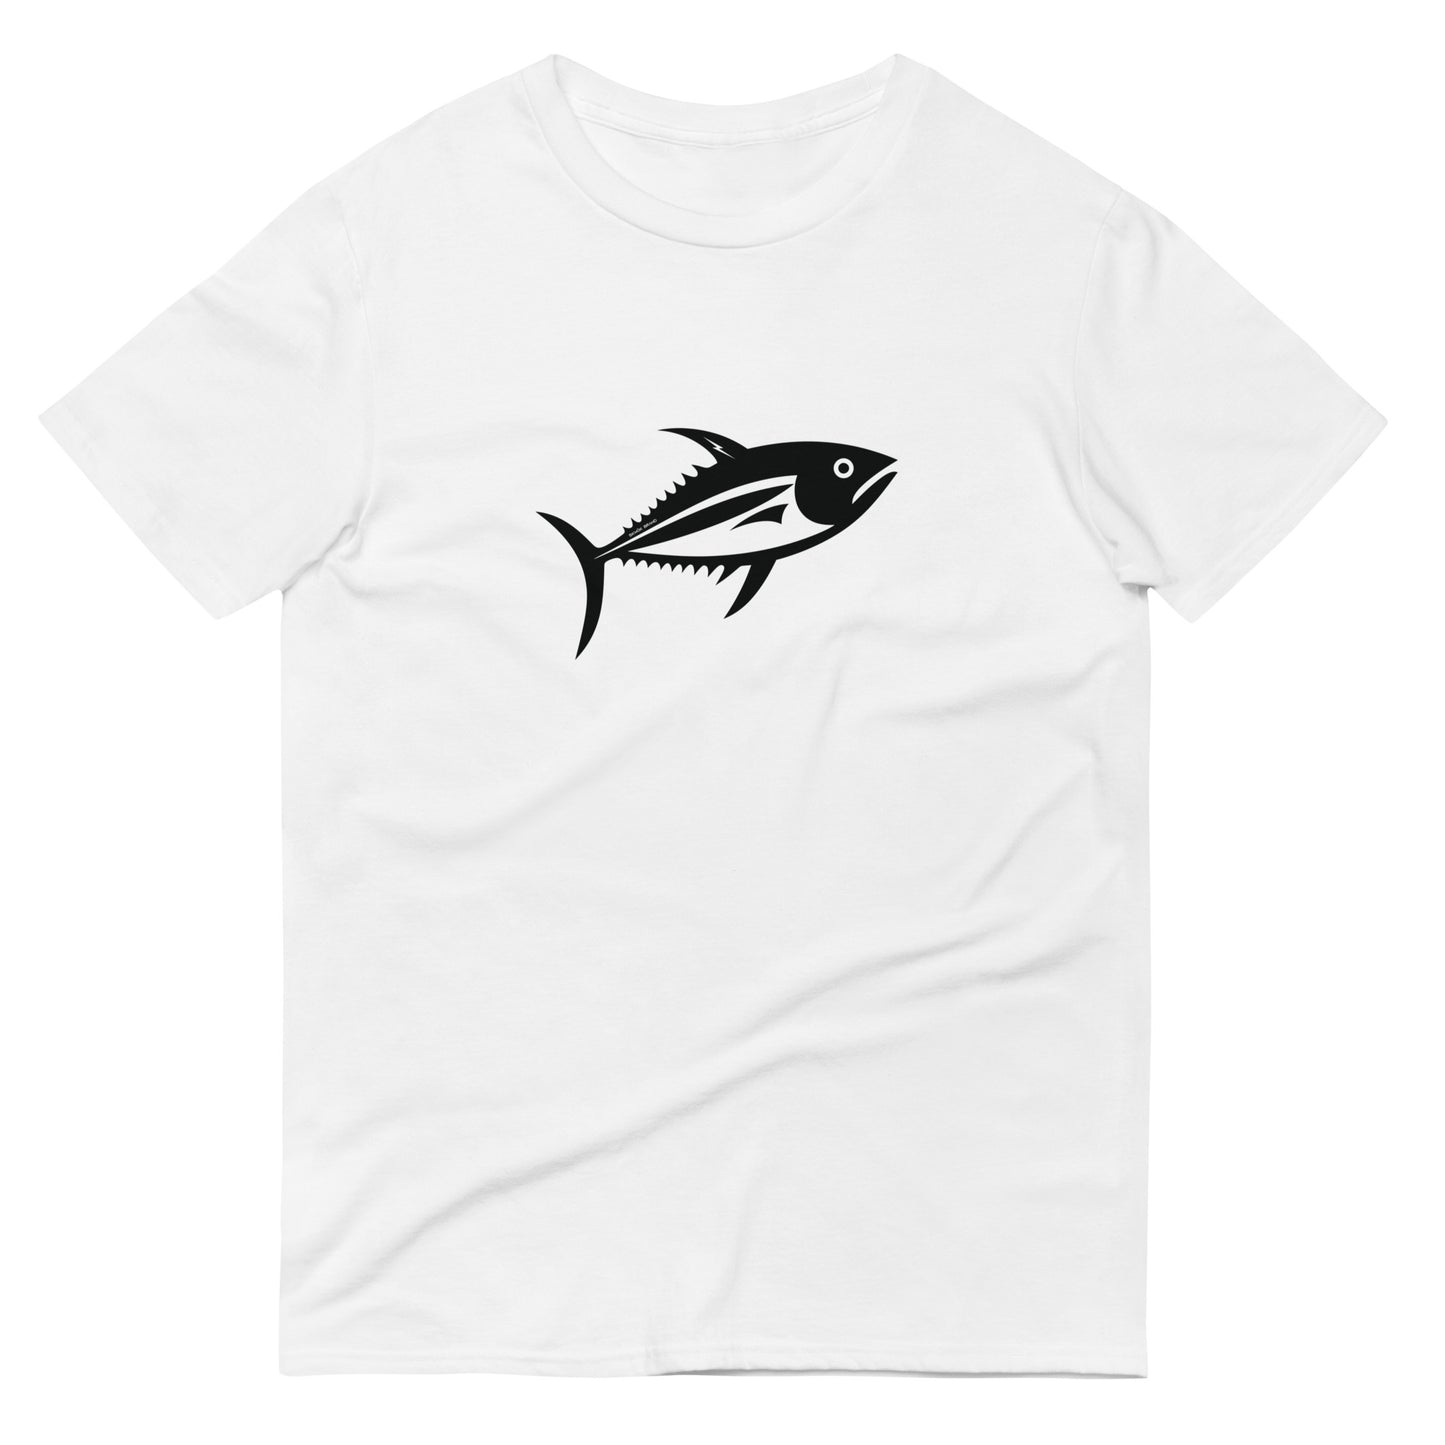 Skwok Brand / #20 / T-shirt / Big Tuna